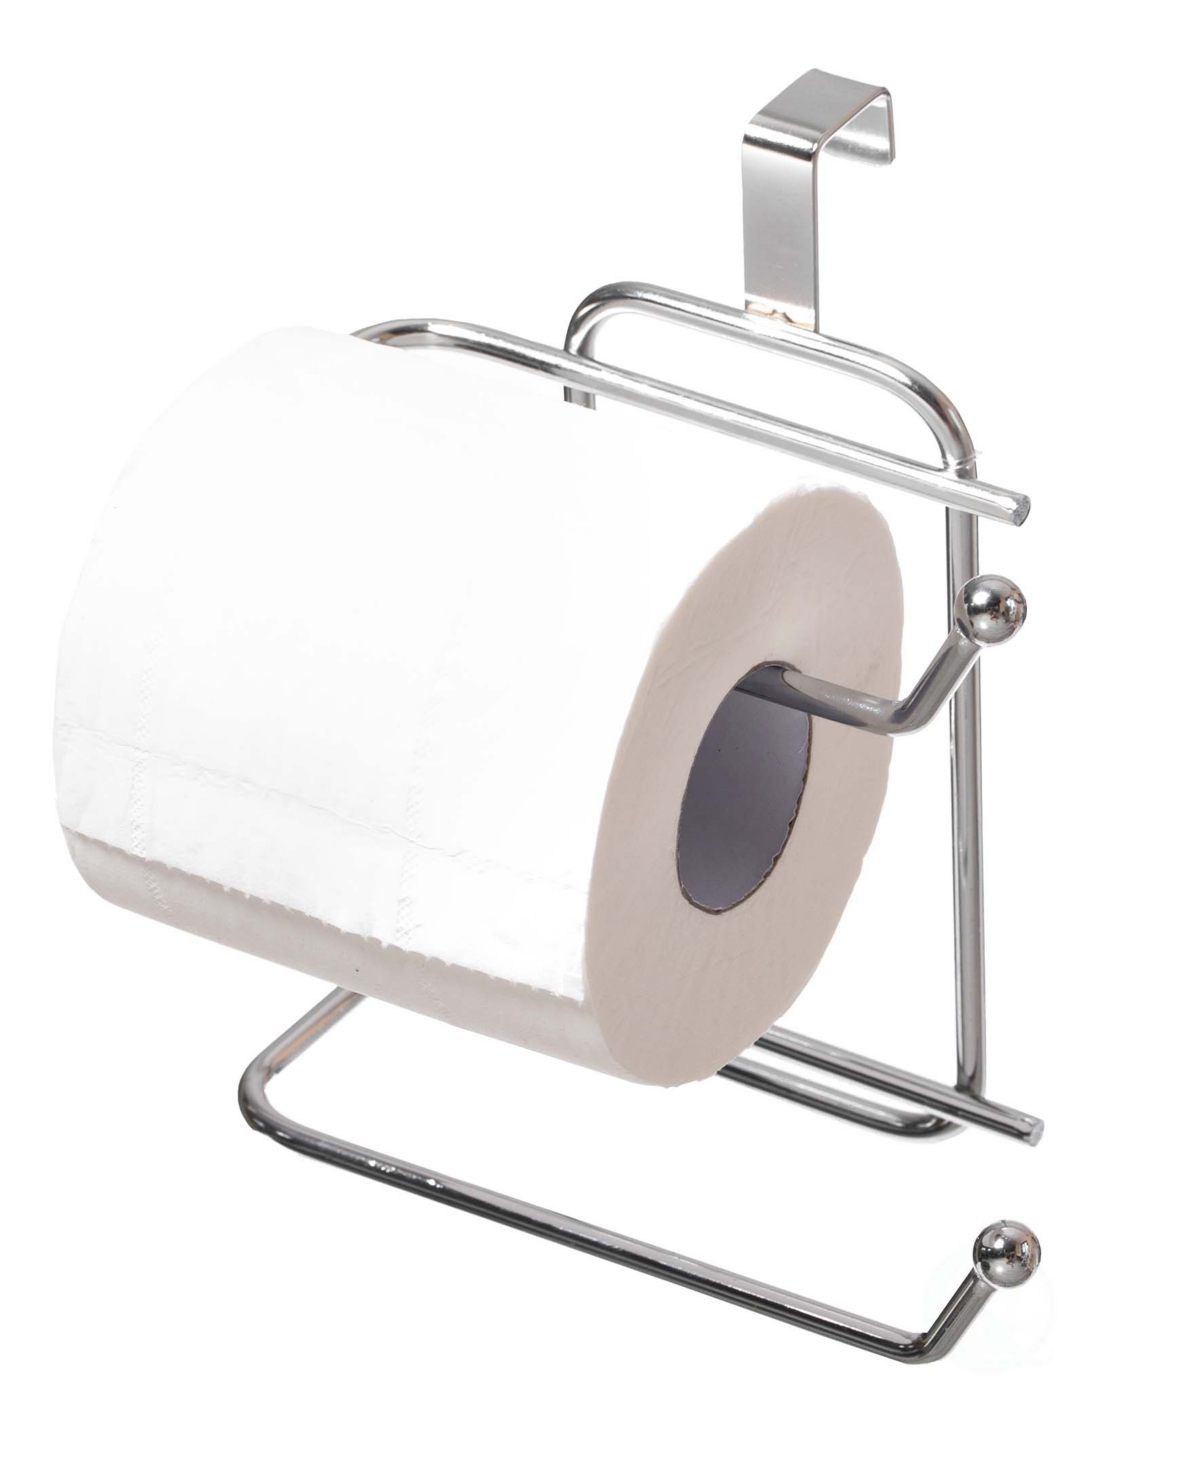 Basicwise Chrome Toilet Tissue Paper Roll Holder Dispenser, Over The Tank Two Slot Tissue Organizer In Silver